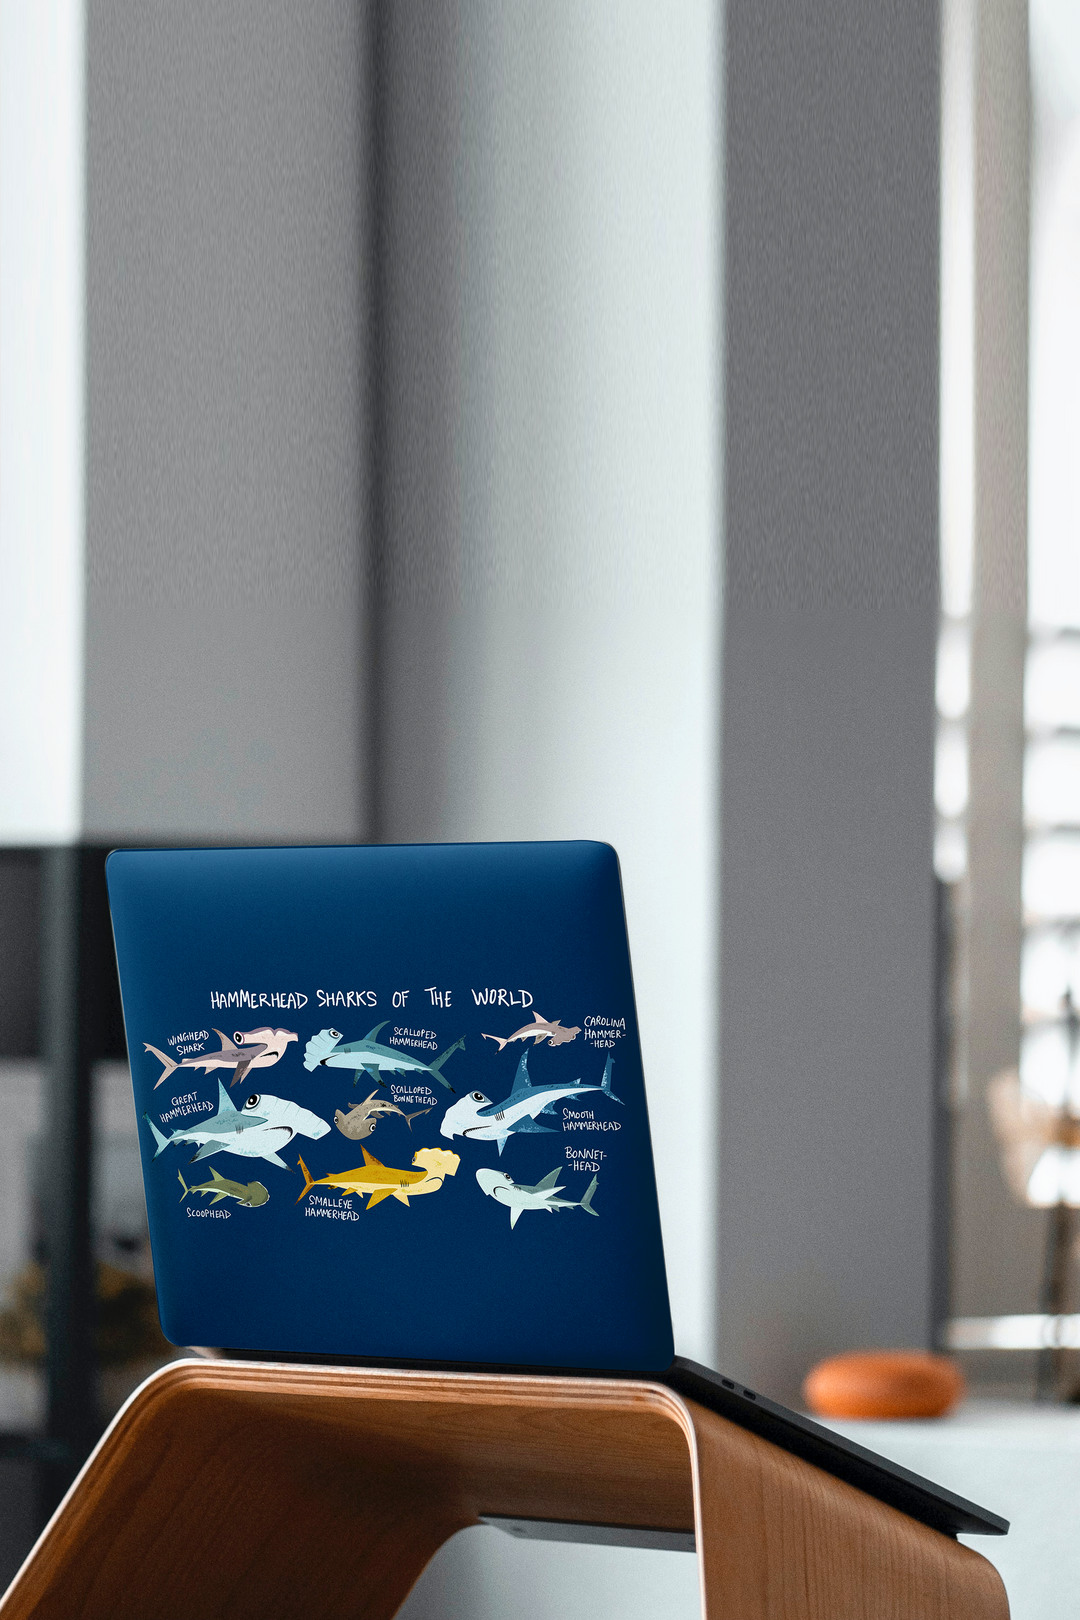 Hammerhead Sharks of the World Laptop Skin